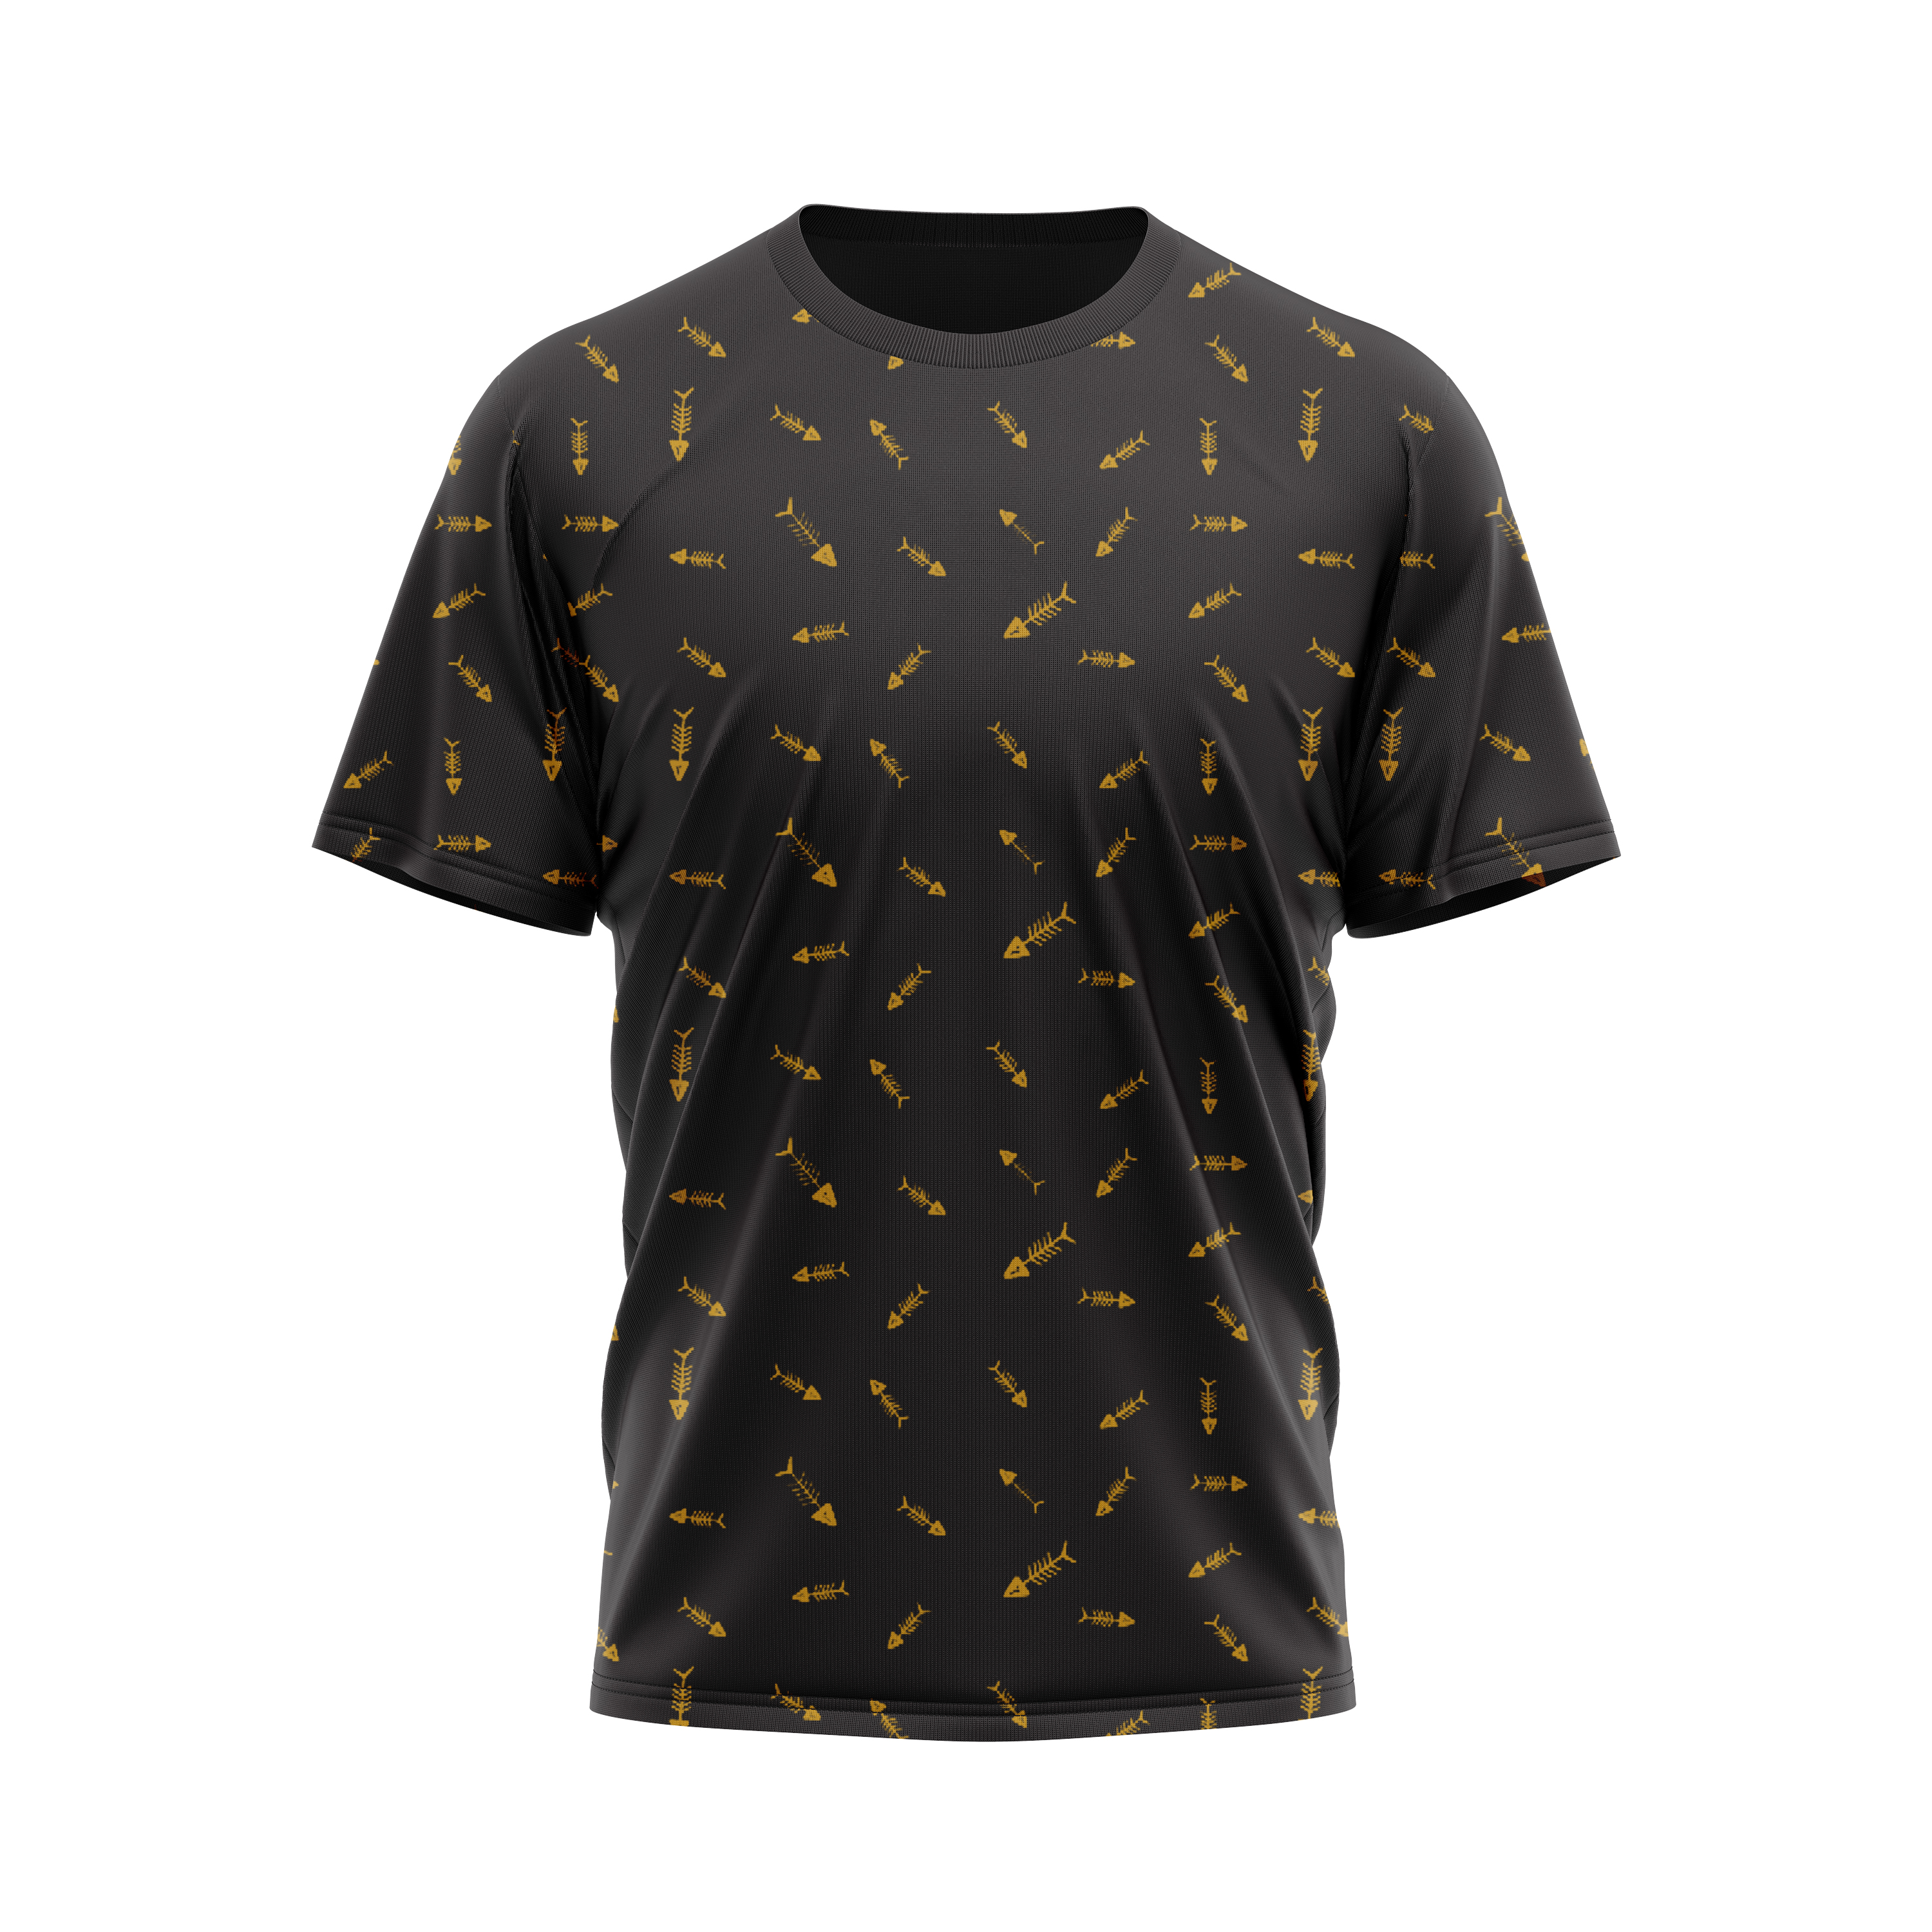 New Short Sleeve Summer Printed Fashion T-shirt For Men